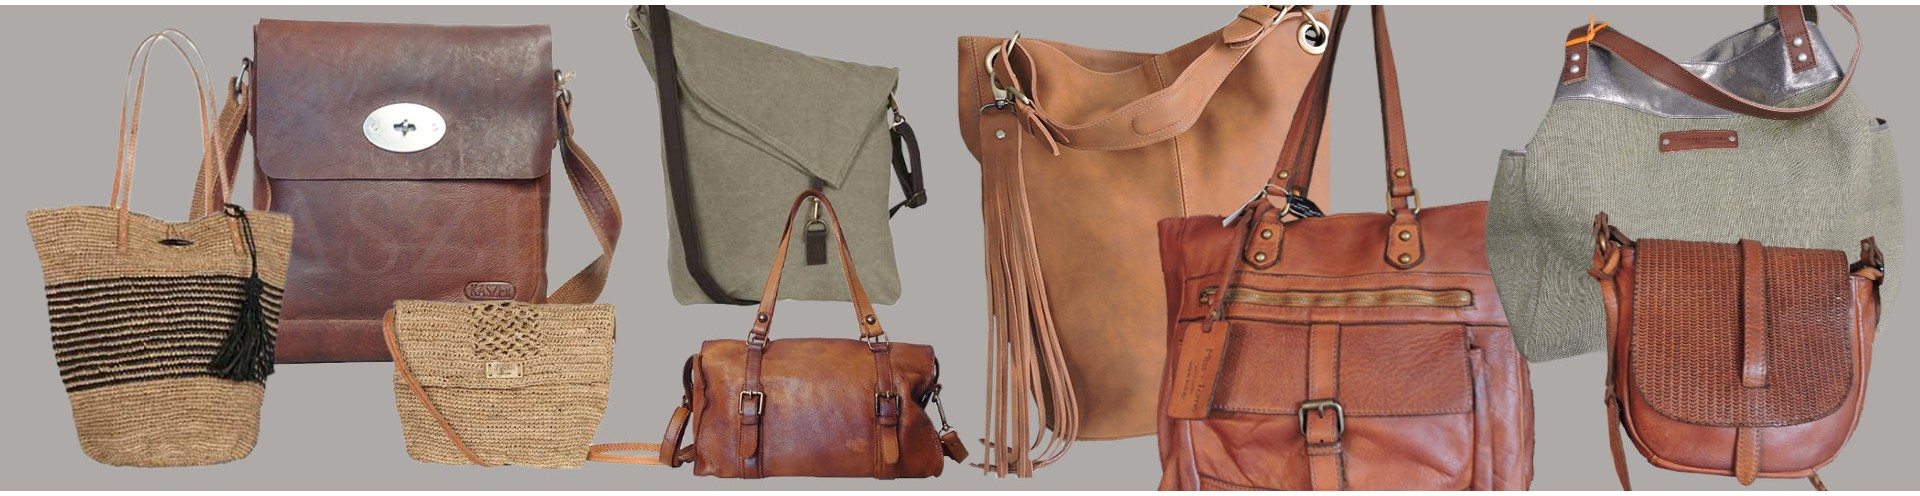 Bags and handbags | Madame Framboise